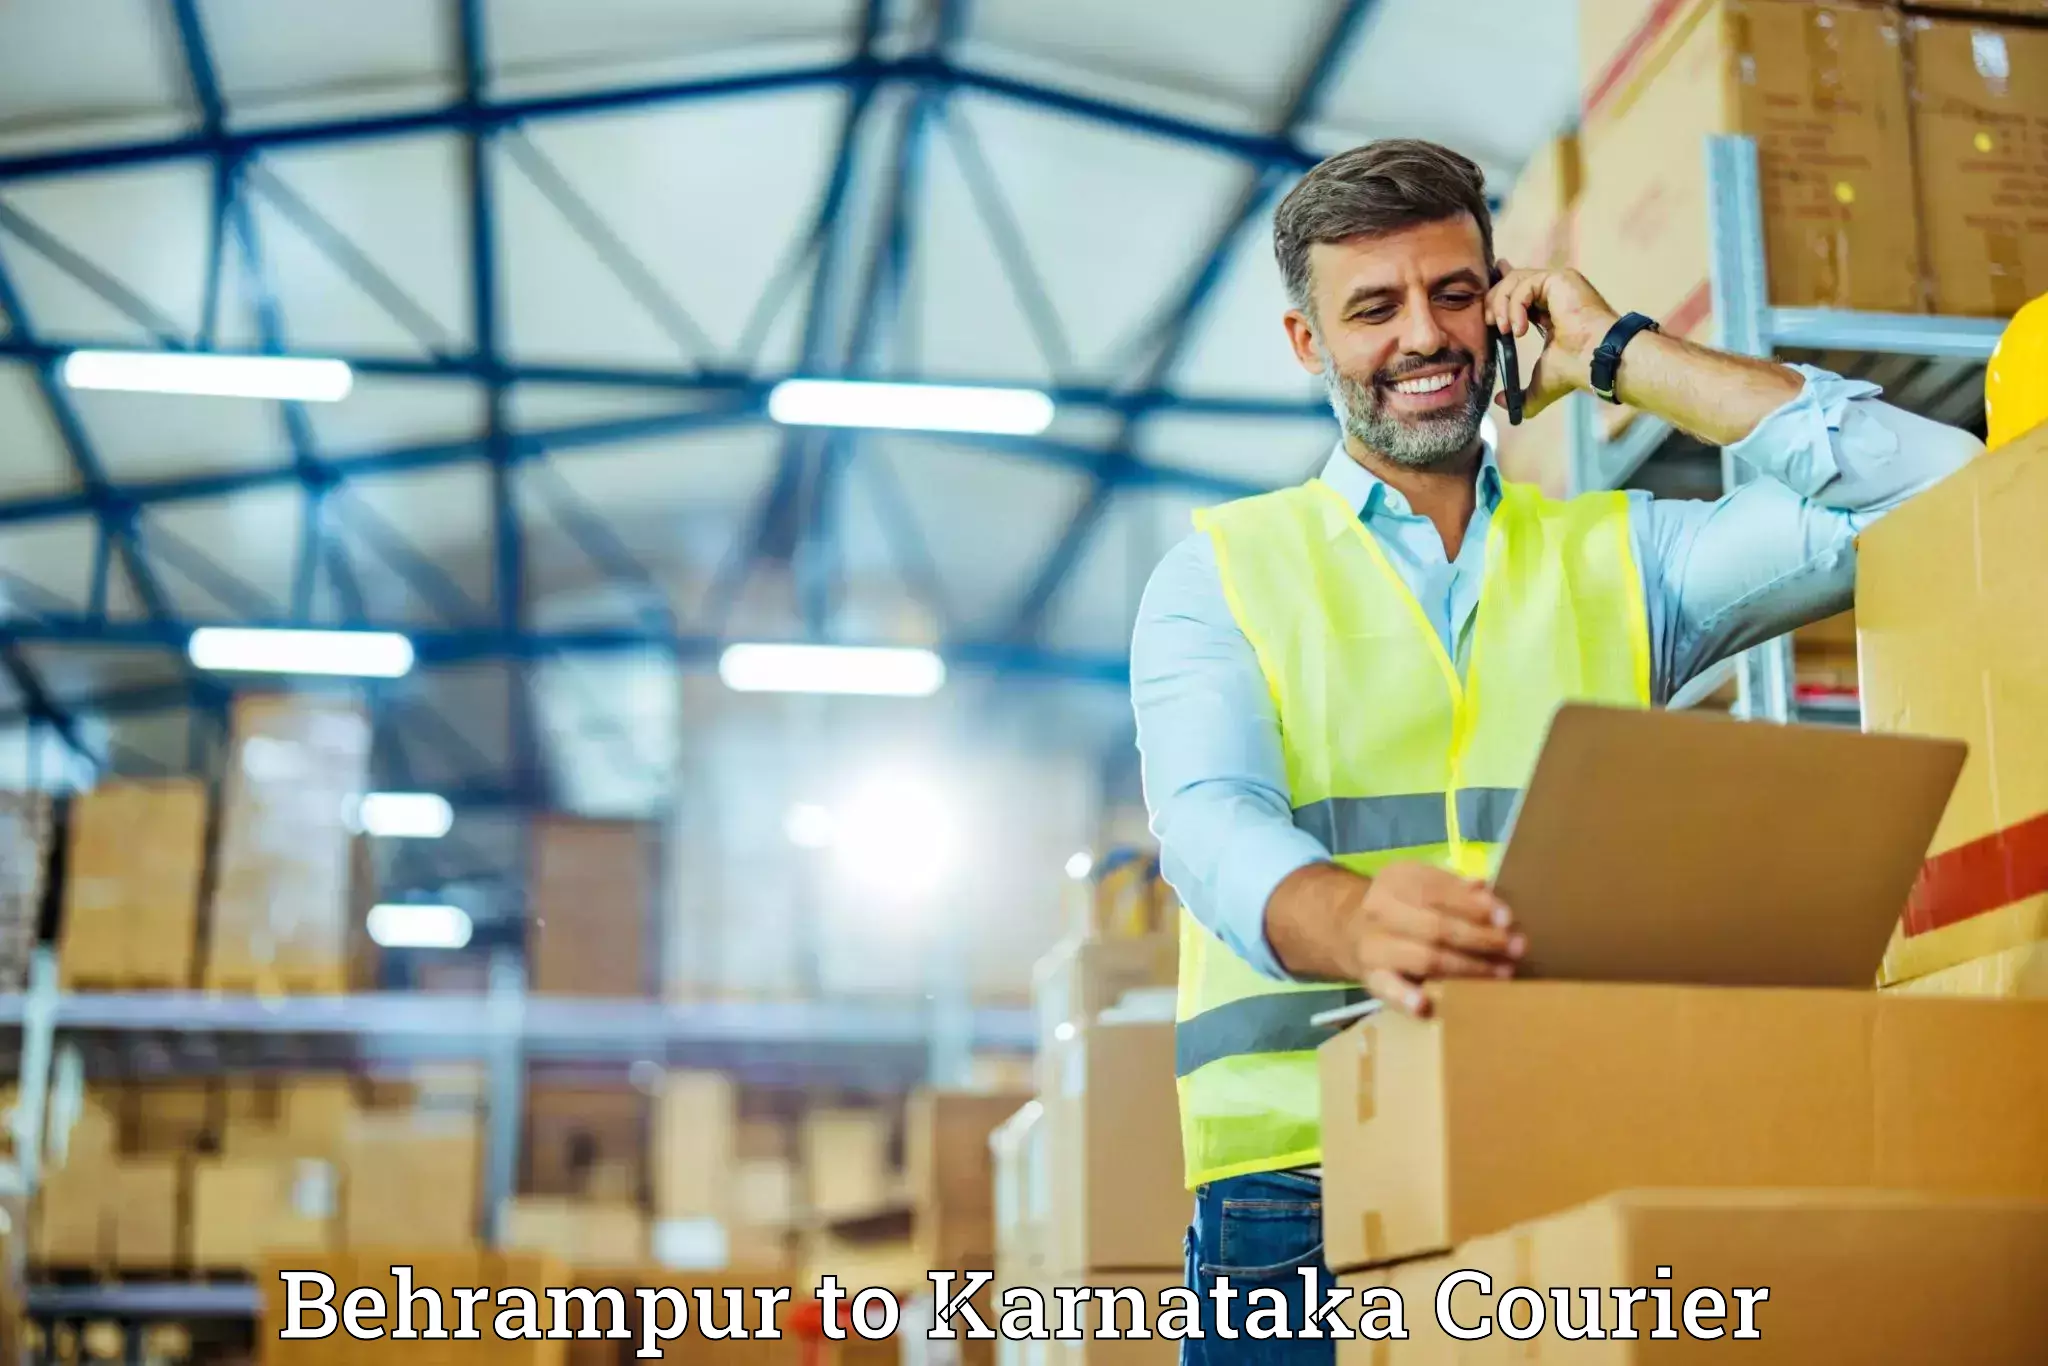 Furniture delivery service Behrampur to Gadag